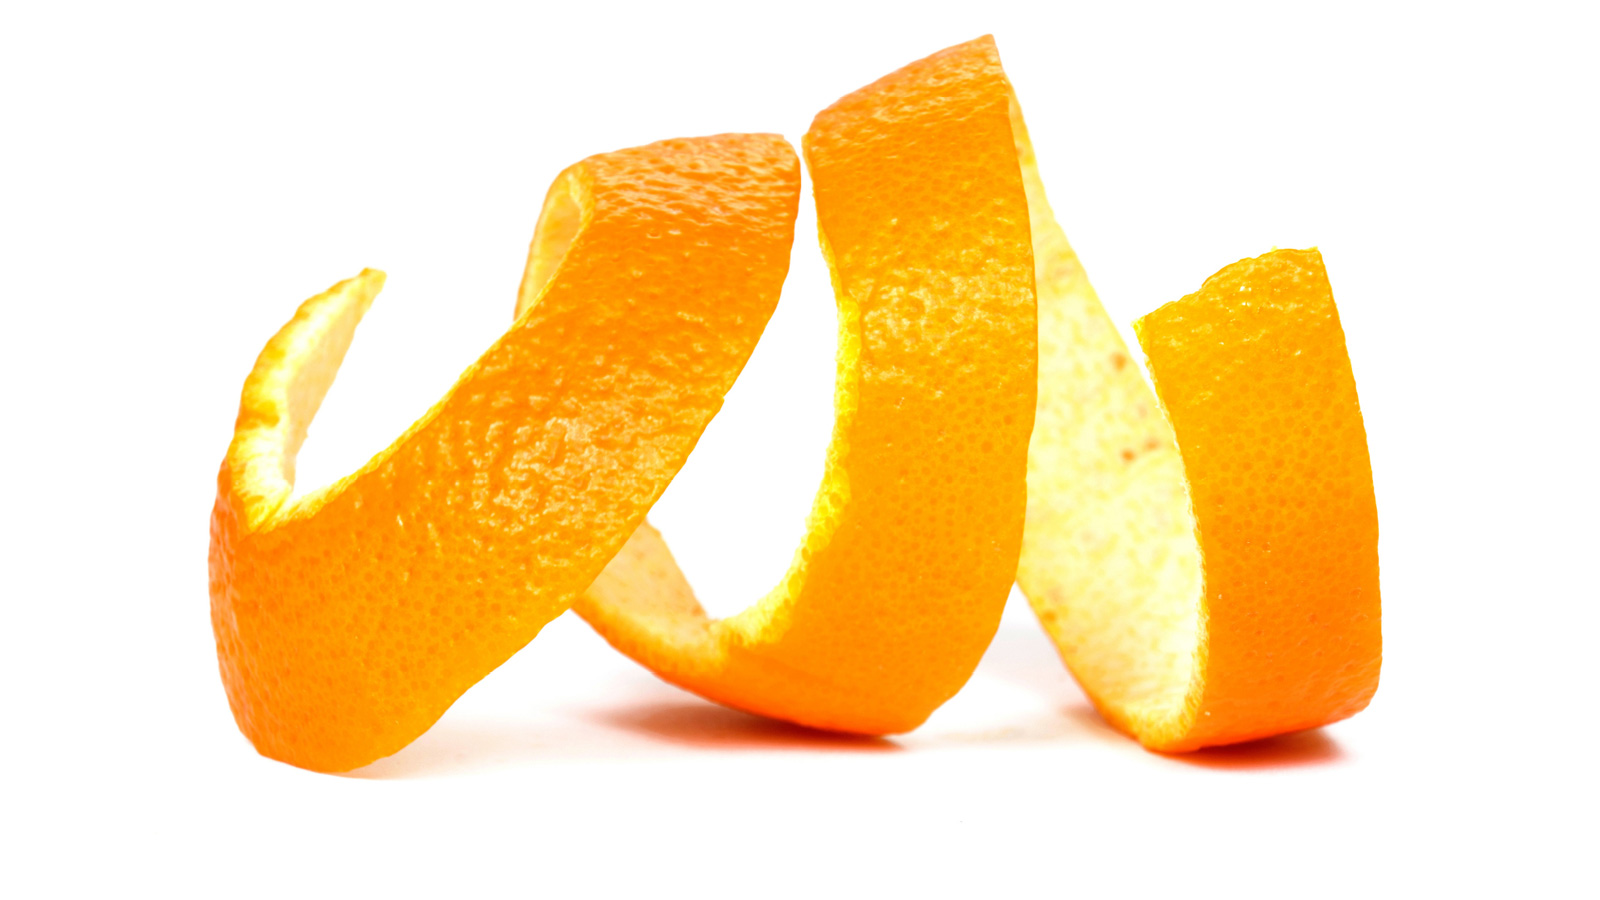 An orange peel